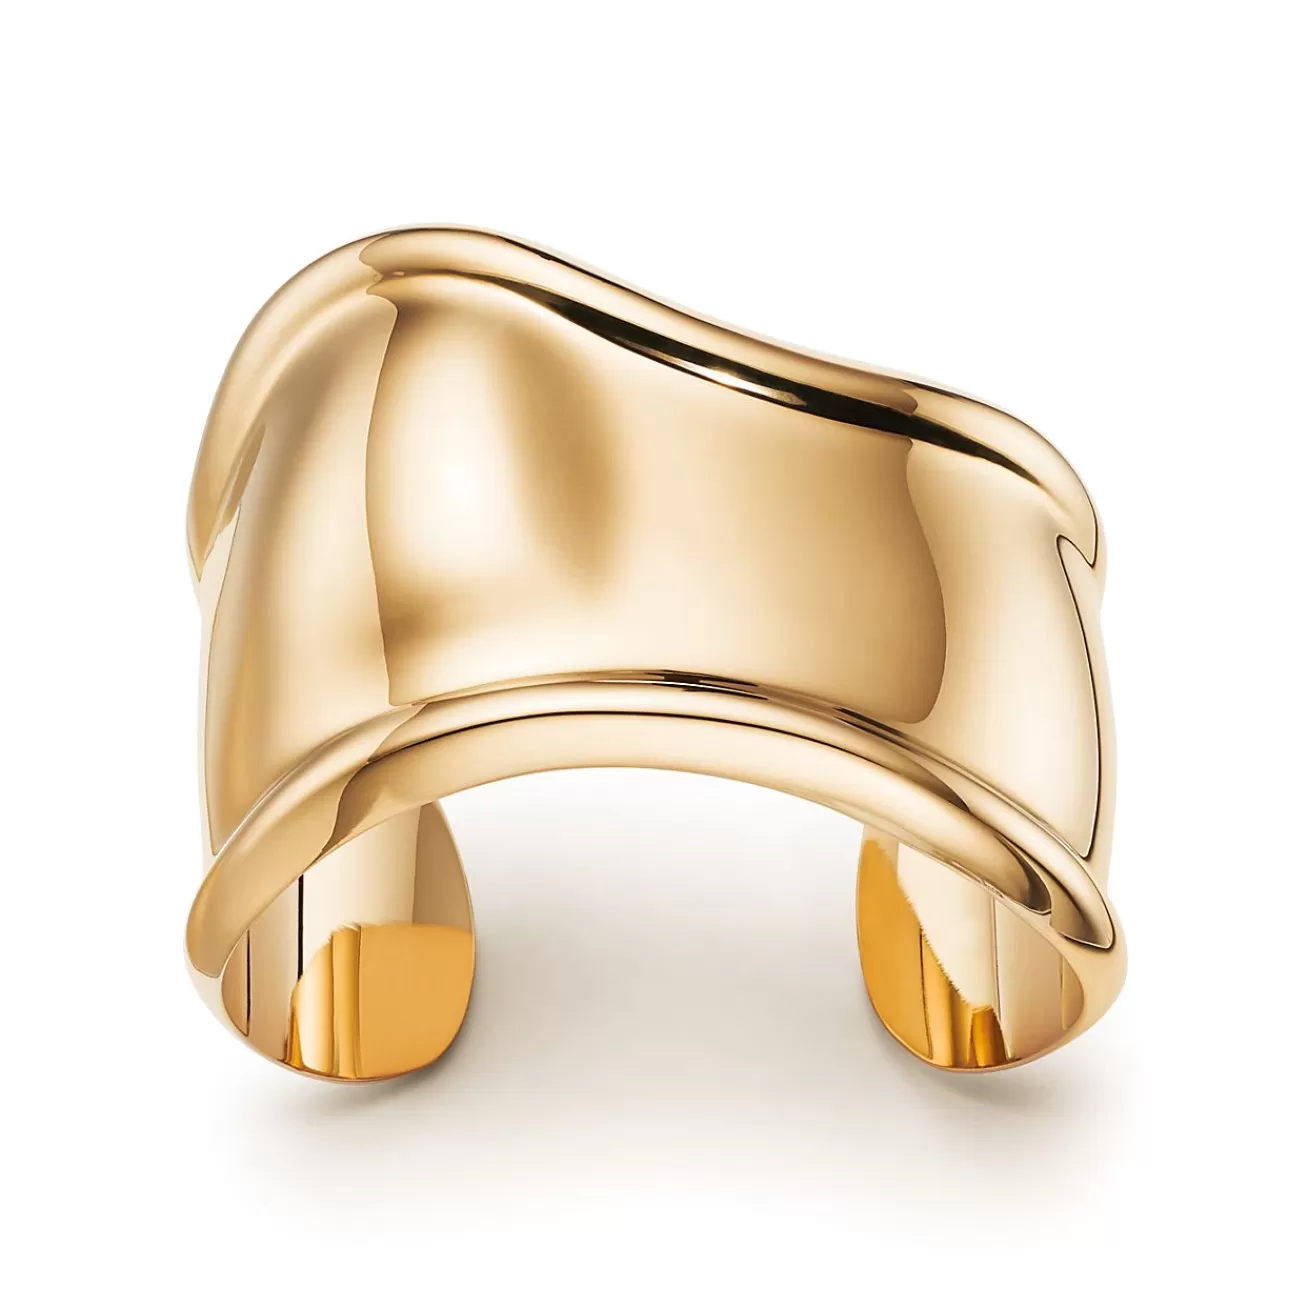 Tiffany & Co. Elsa Peretti® small Bone cuff in 18k gold, 43 mm wide. | ^ Bracelets | Gifts for Her